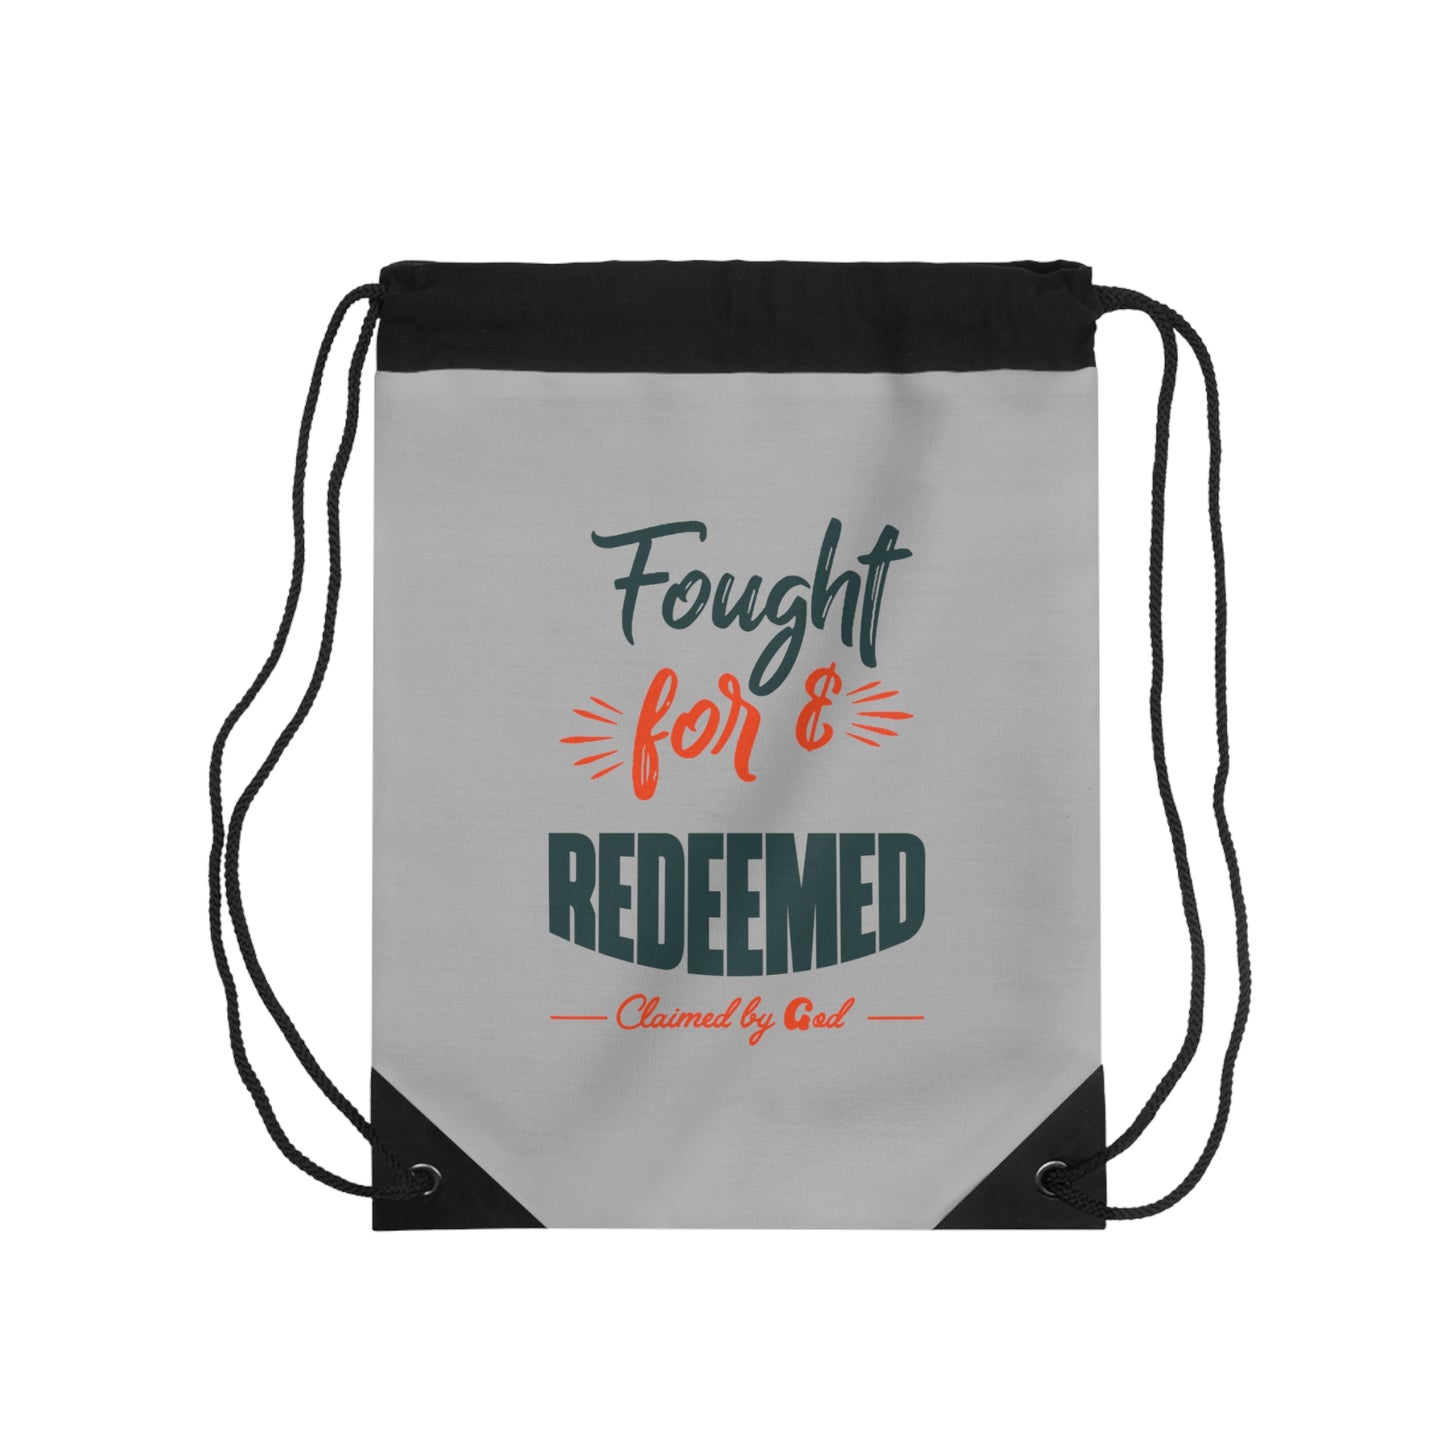 Fought For & Redeemed Drawstring Bag